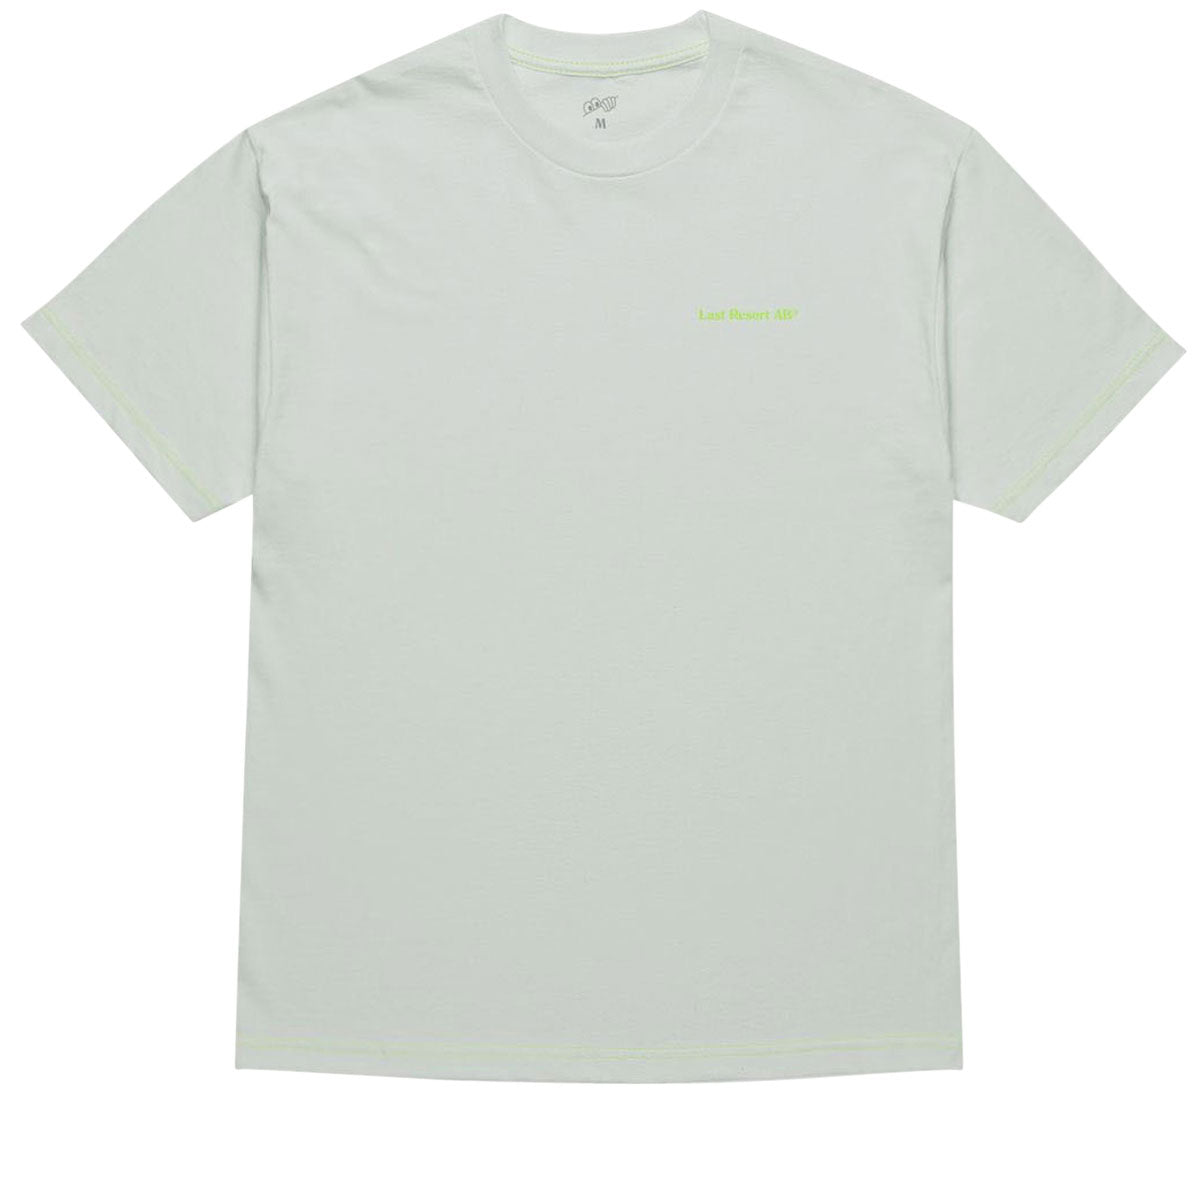 Last Resort AB Atlas Monogram T-Shirt - Green Tint/Neon image 2